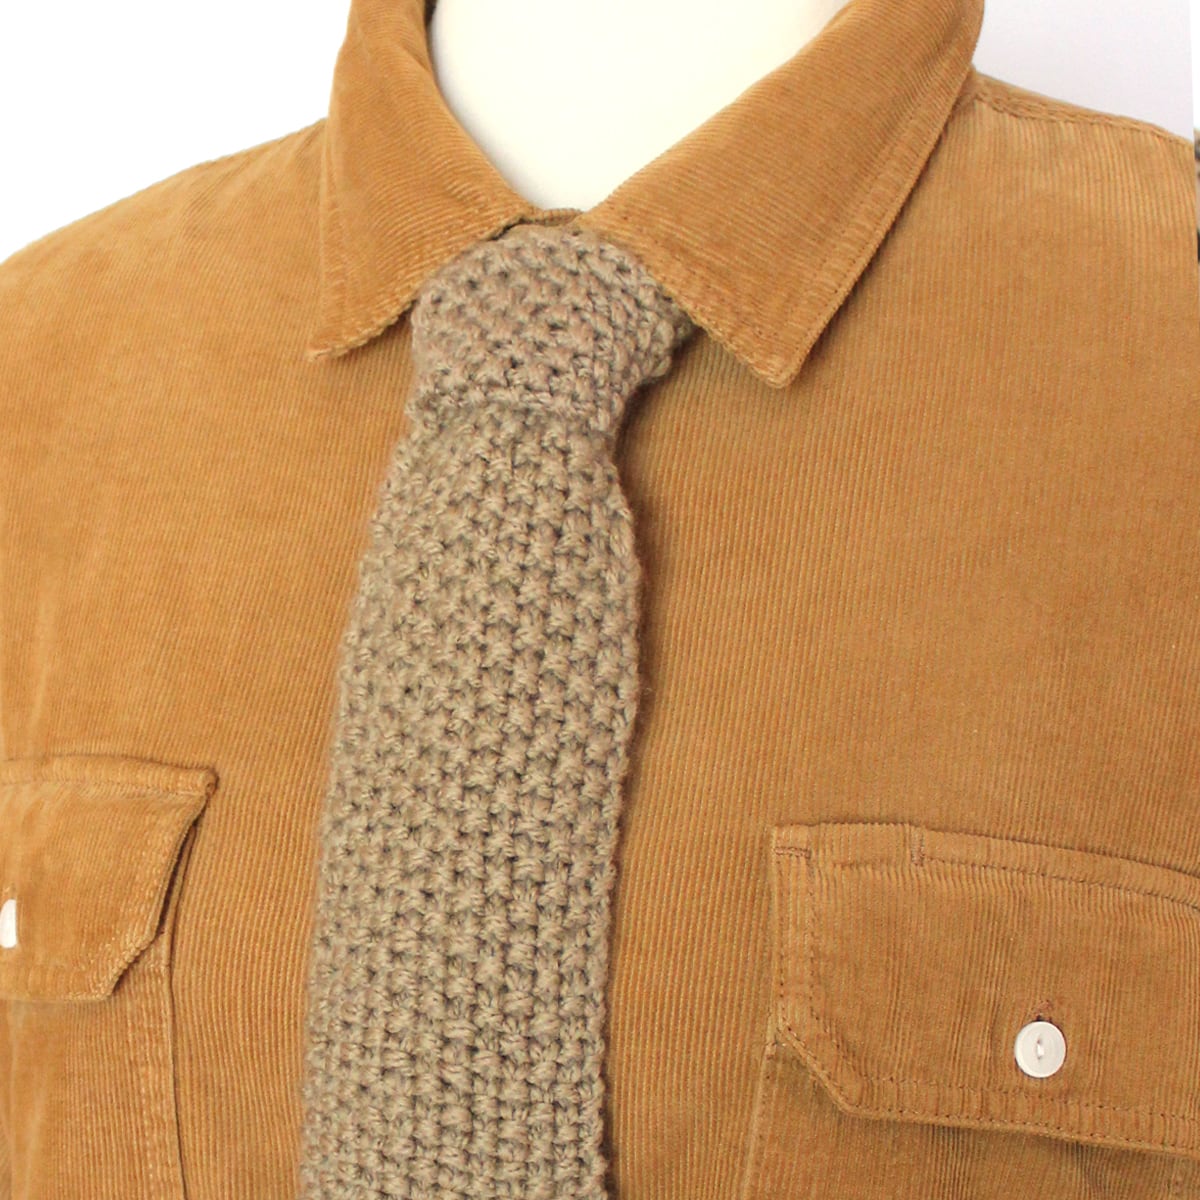 Seed stitch knitted necktie worn on tan men's corderoy shirt.